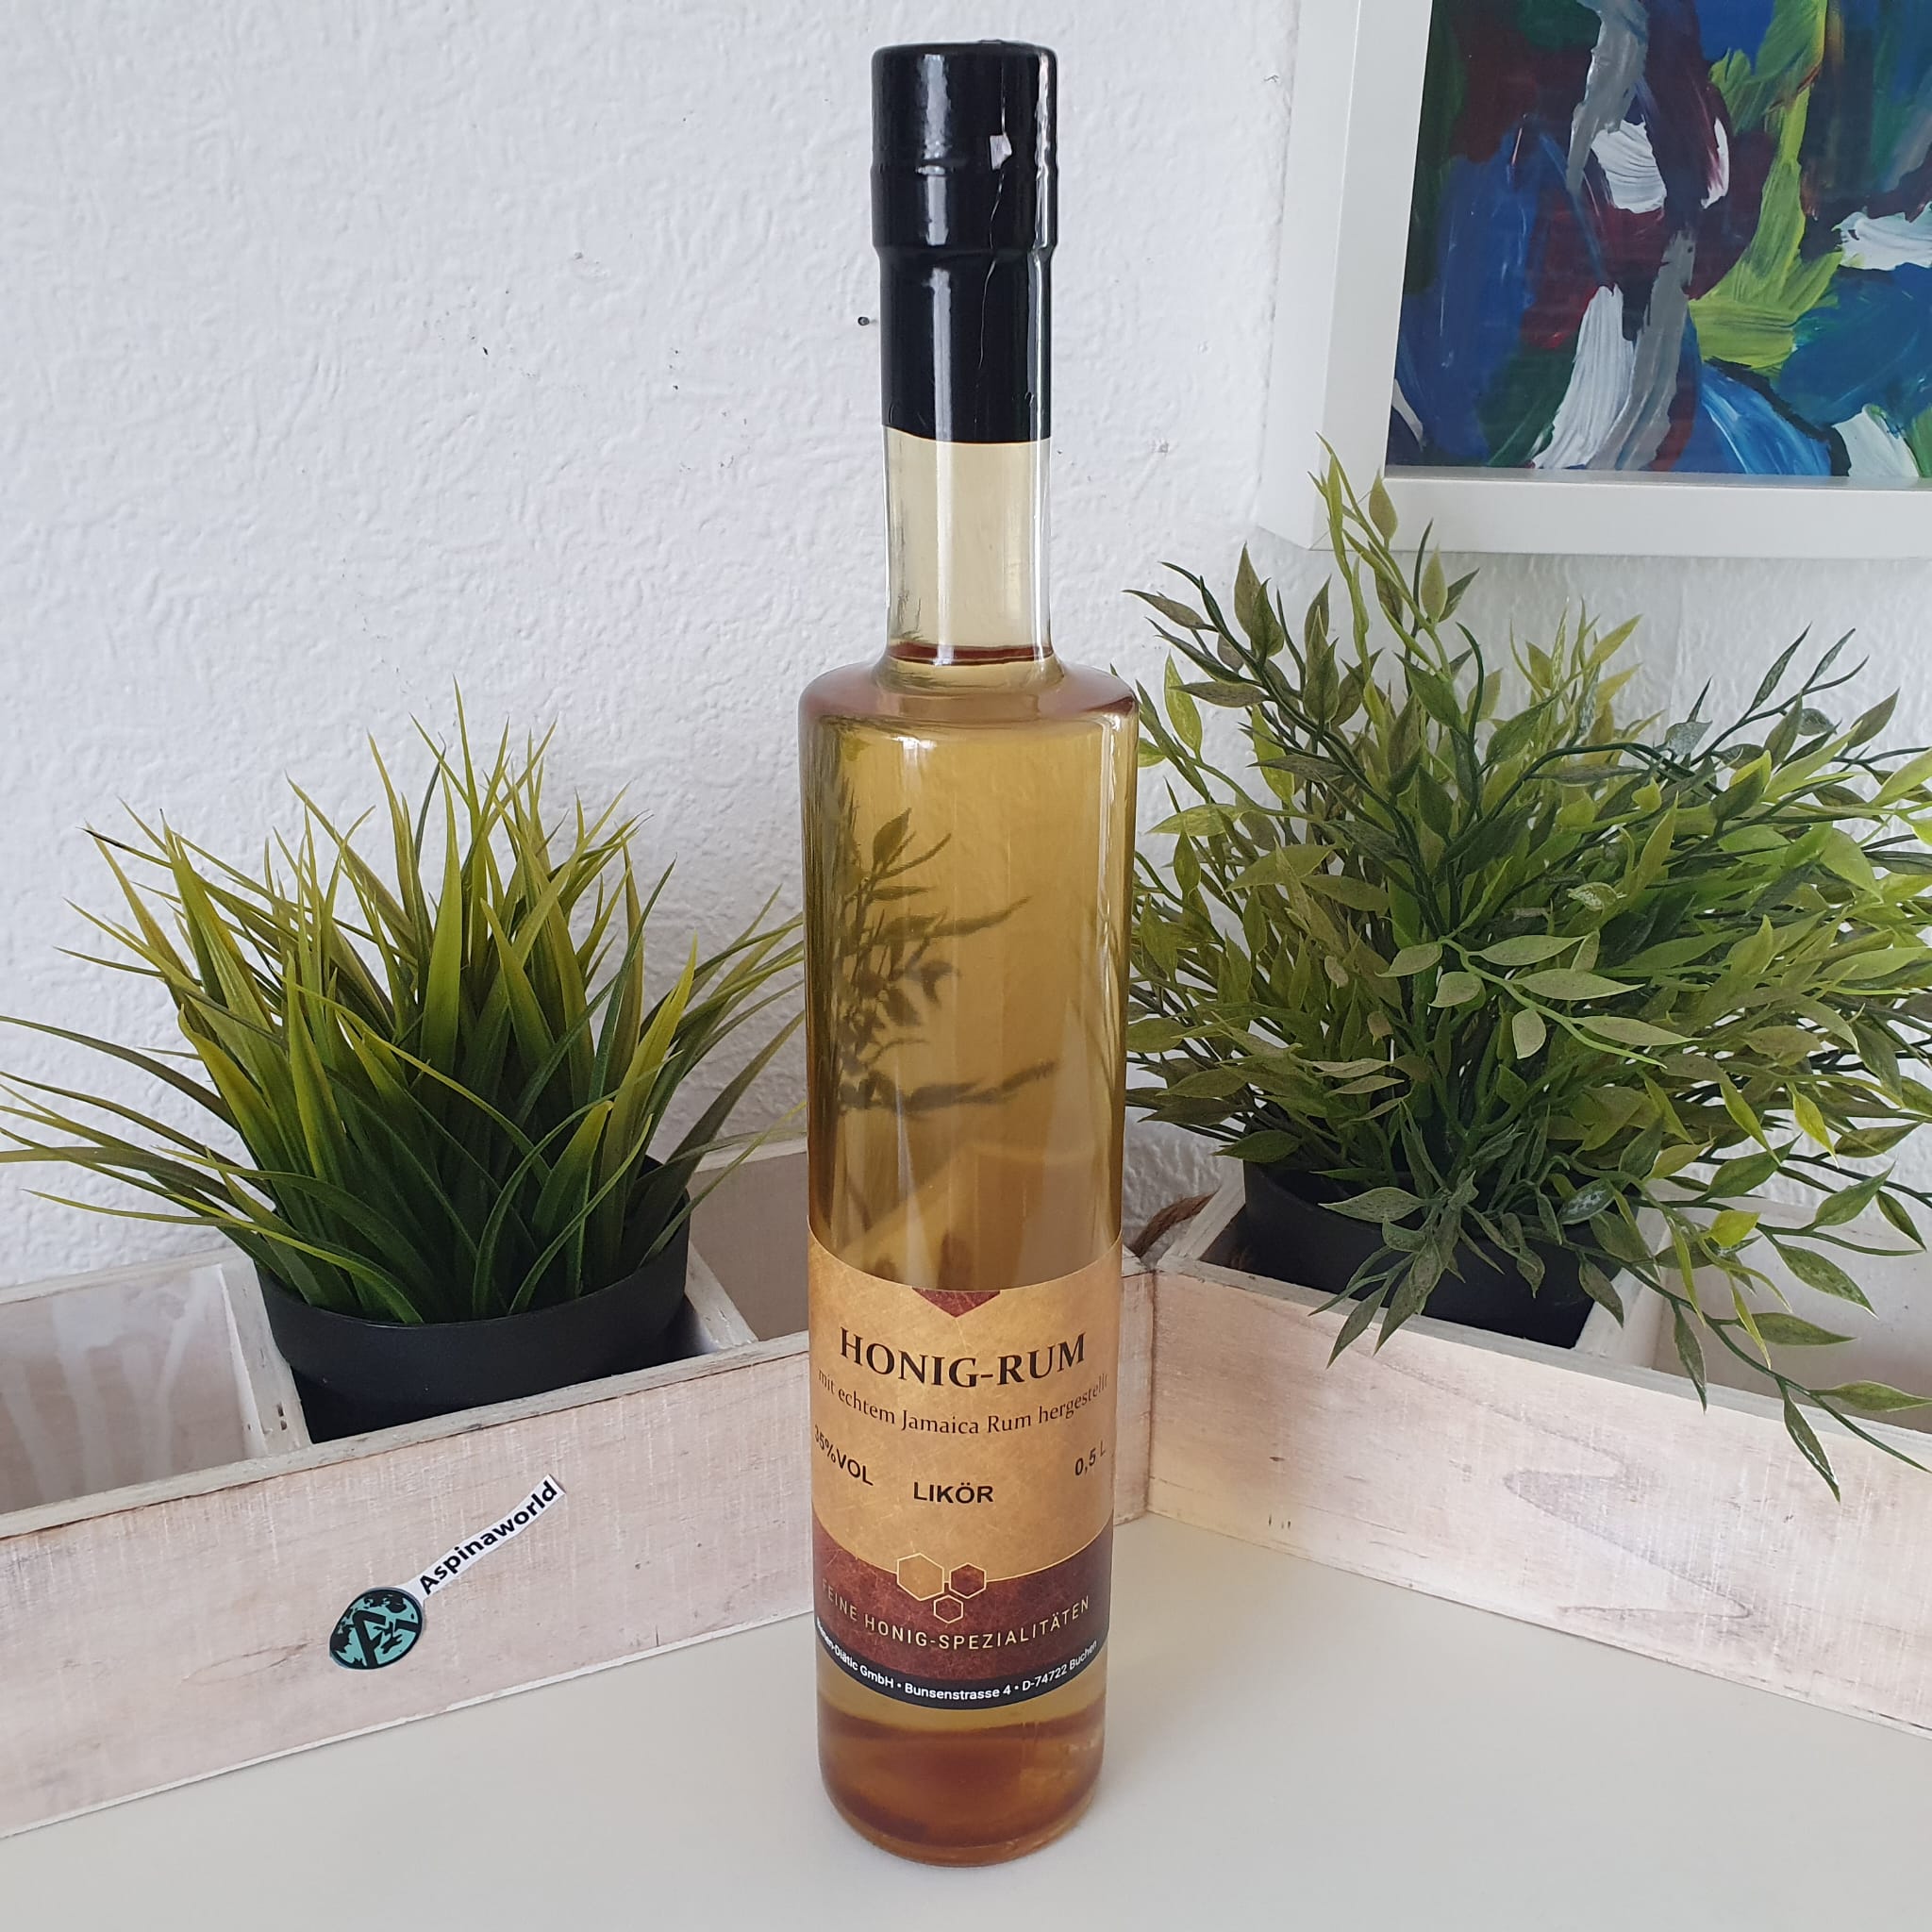 Honig Rum 35% 0,5 Liter Likör aus echtem Jamaica Rum